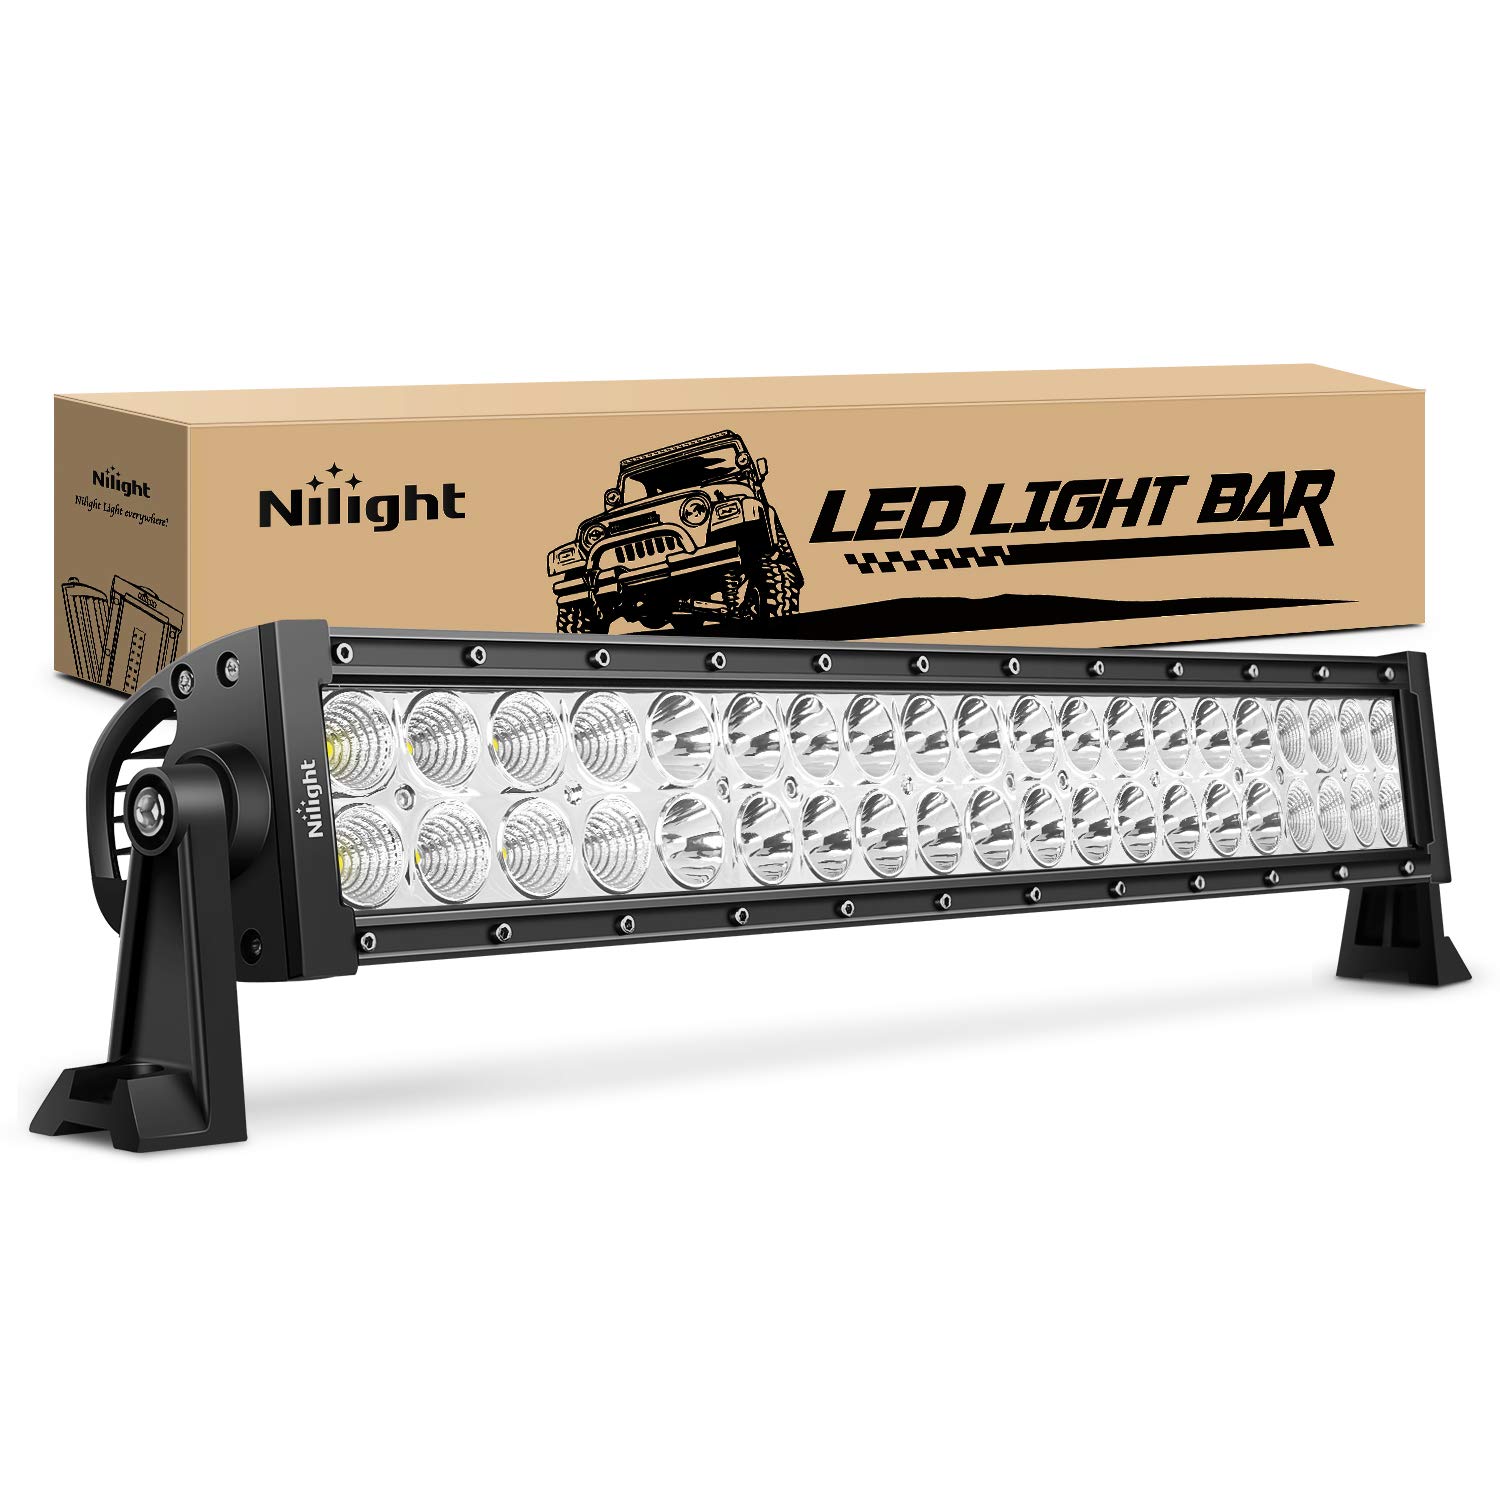 Nilight - 70003C-A 22" 120w LED Light Bar Flood Spot Combo Work Light Driving Lights Fog Lamp Offroad Lighting for SUV Ute ATV Truck 4x4 Boat,2 Years Warranty